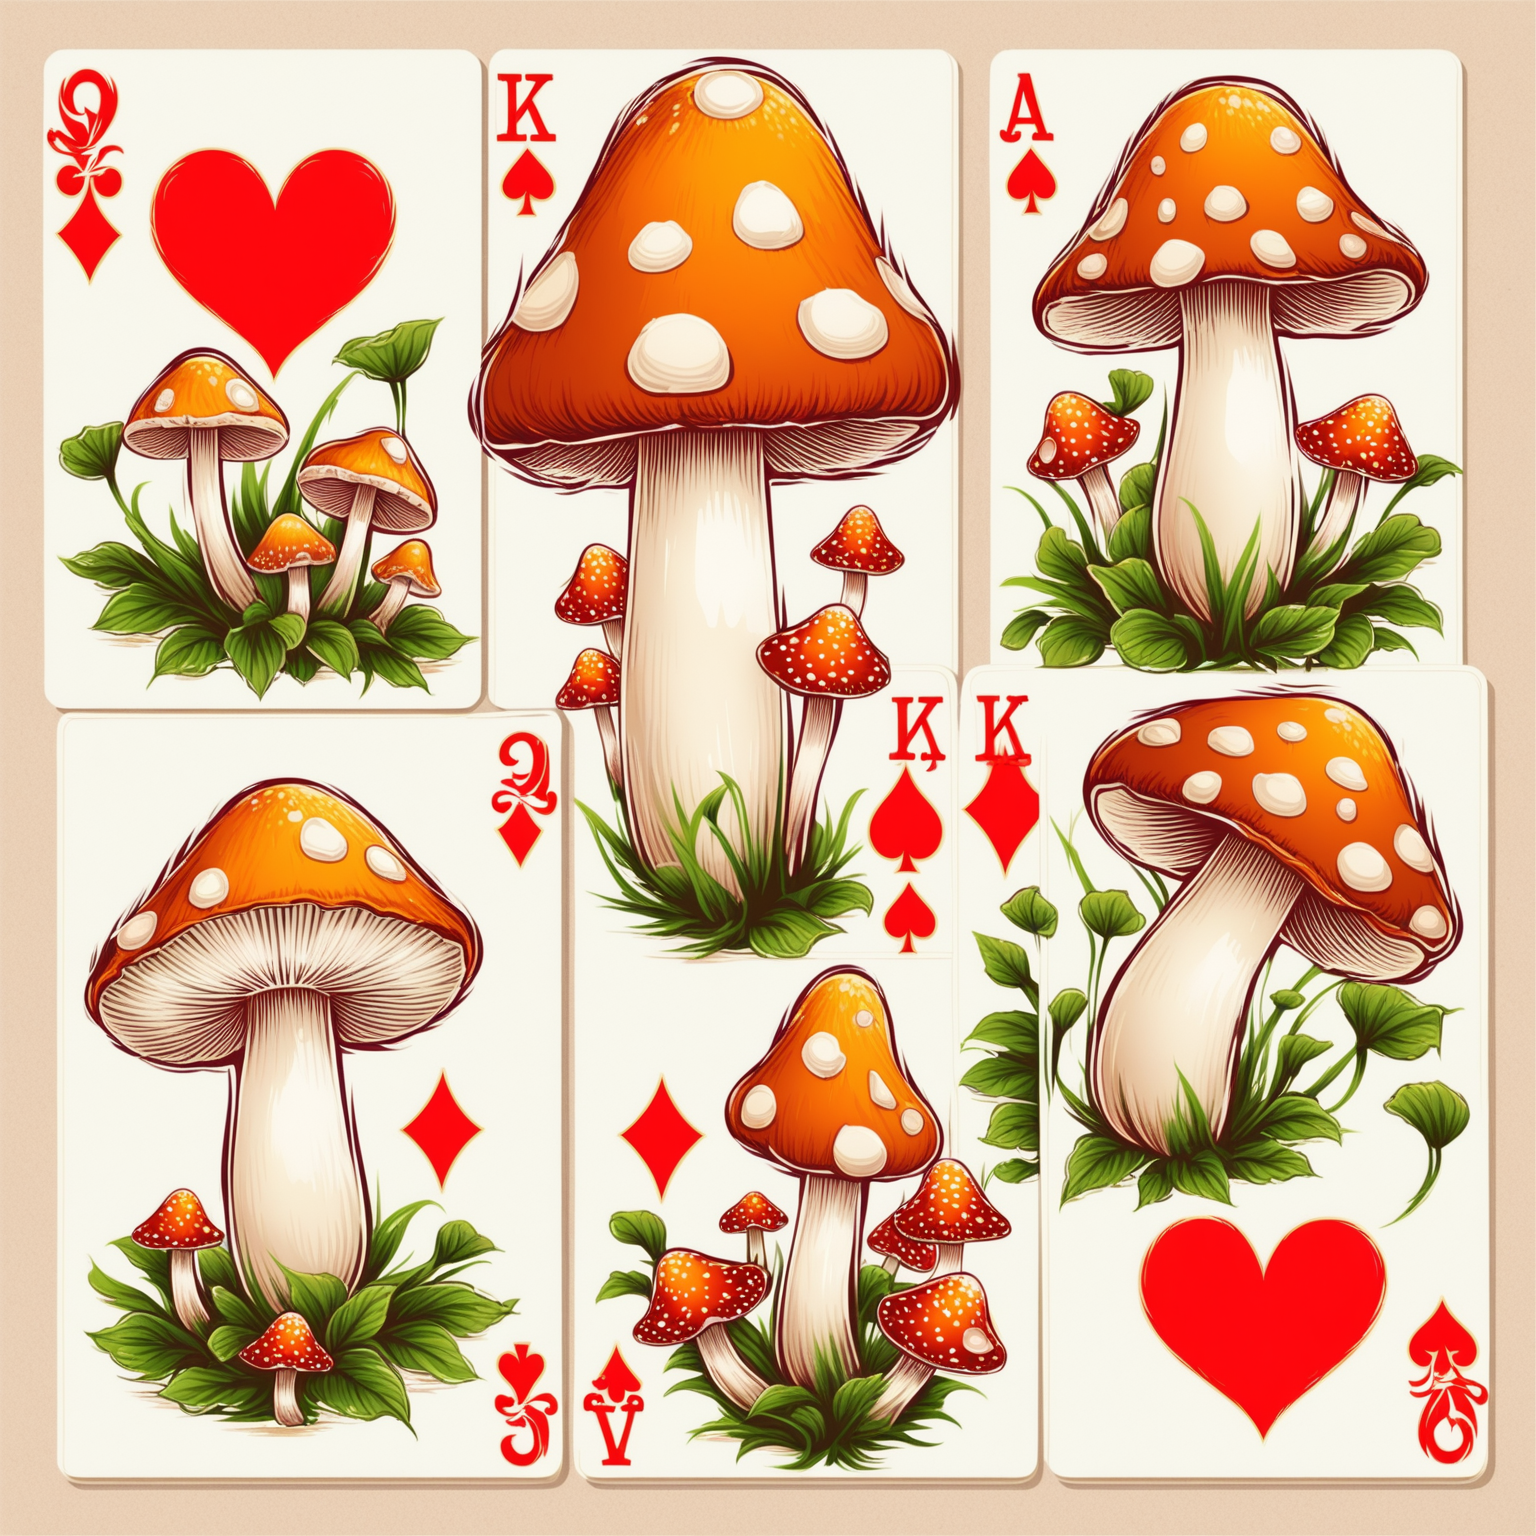 5 playing cards making a royal flush of mushrooms